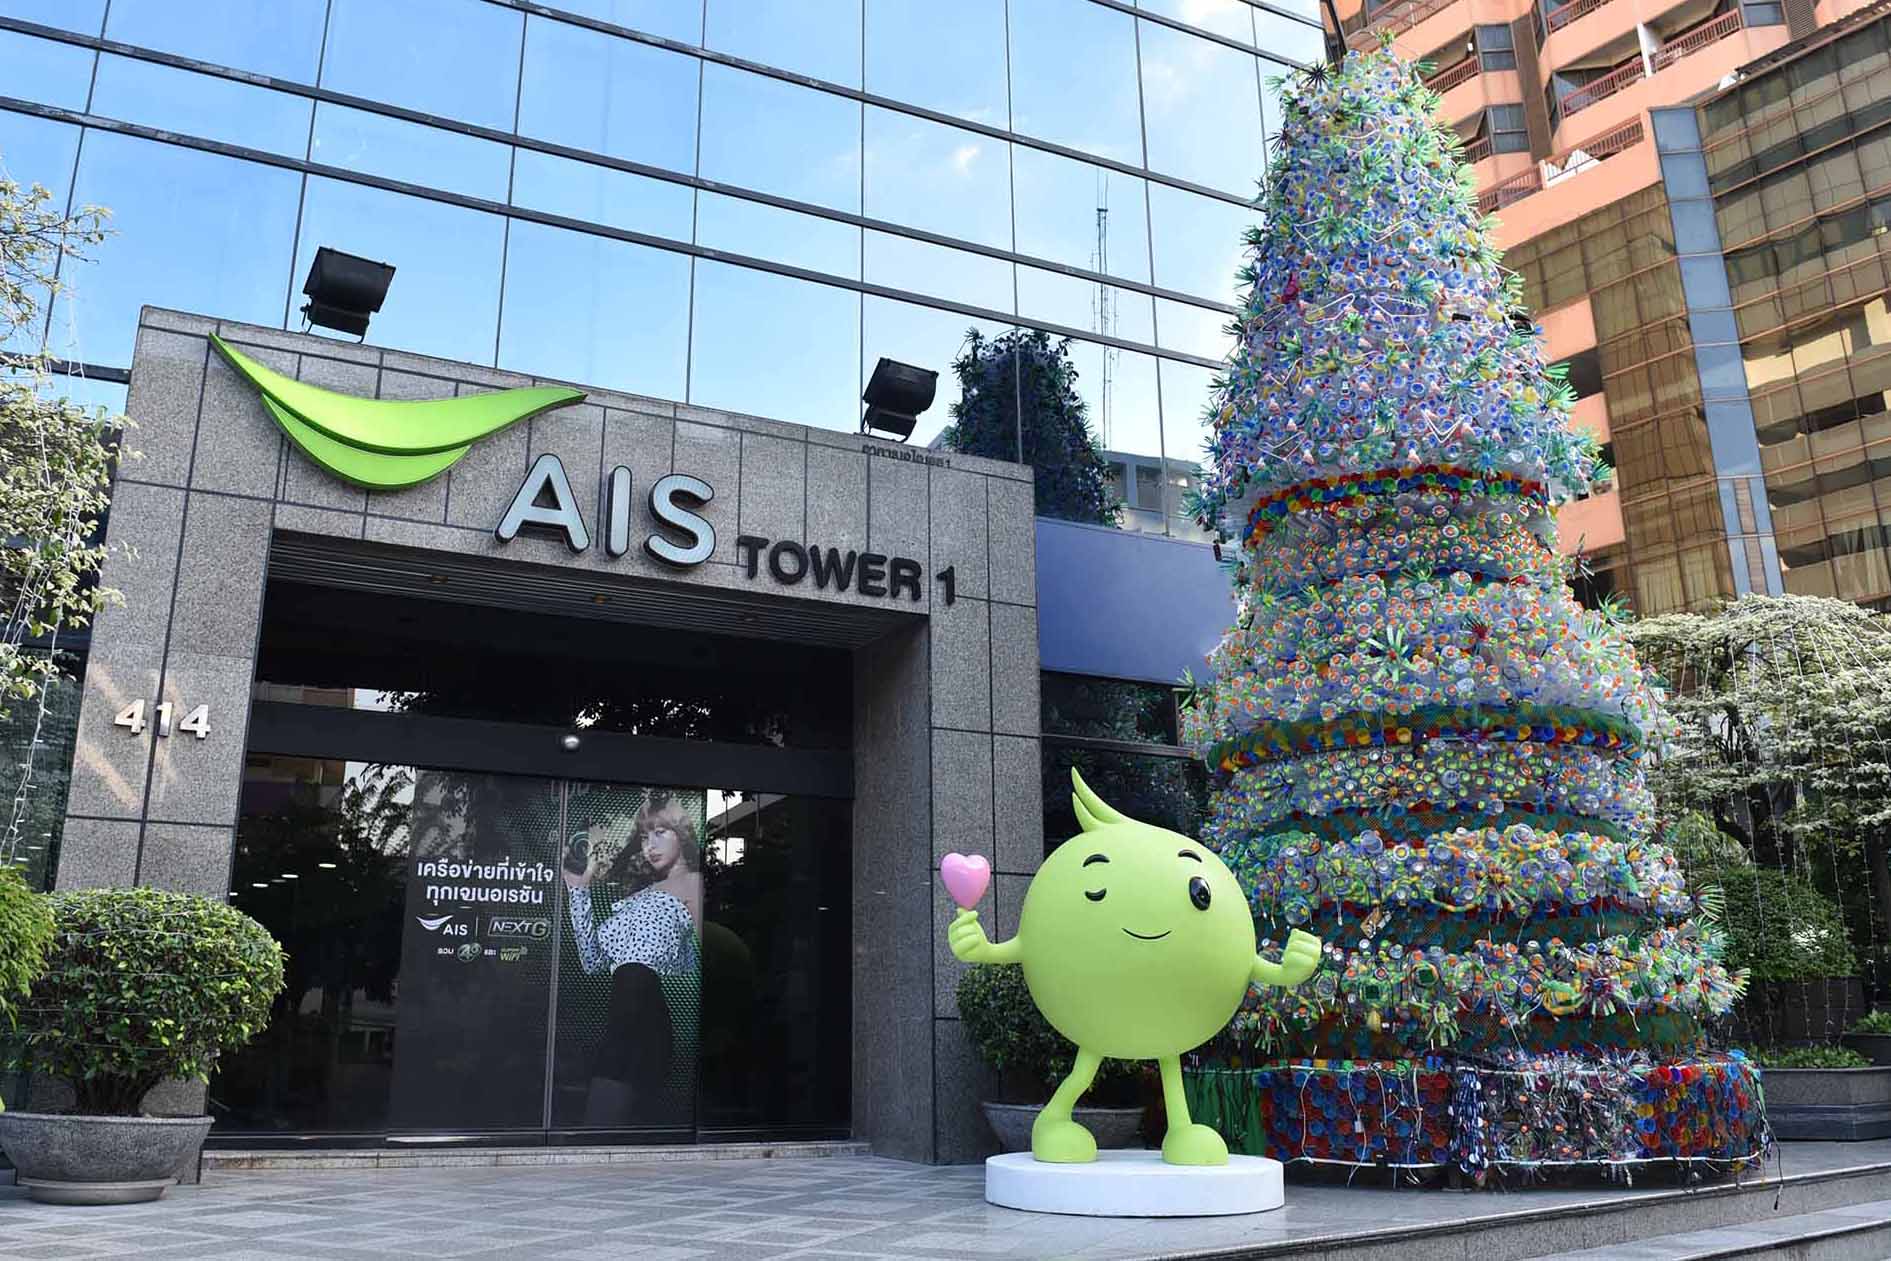 AIS บอกเล่าคุณค่า E-Waste ผ่านต้นคริสต์มาสทำจากขยะอิเล็กทรอนิกส์ ครั้งแรกของไทย  พร้อมชวนคนไทยร่วมภารกิจรักษ์โลก Mission Green รับปีใหม่